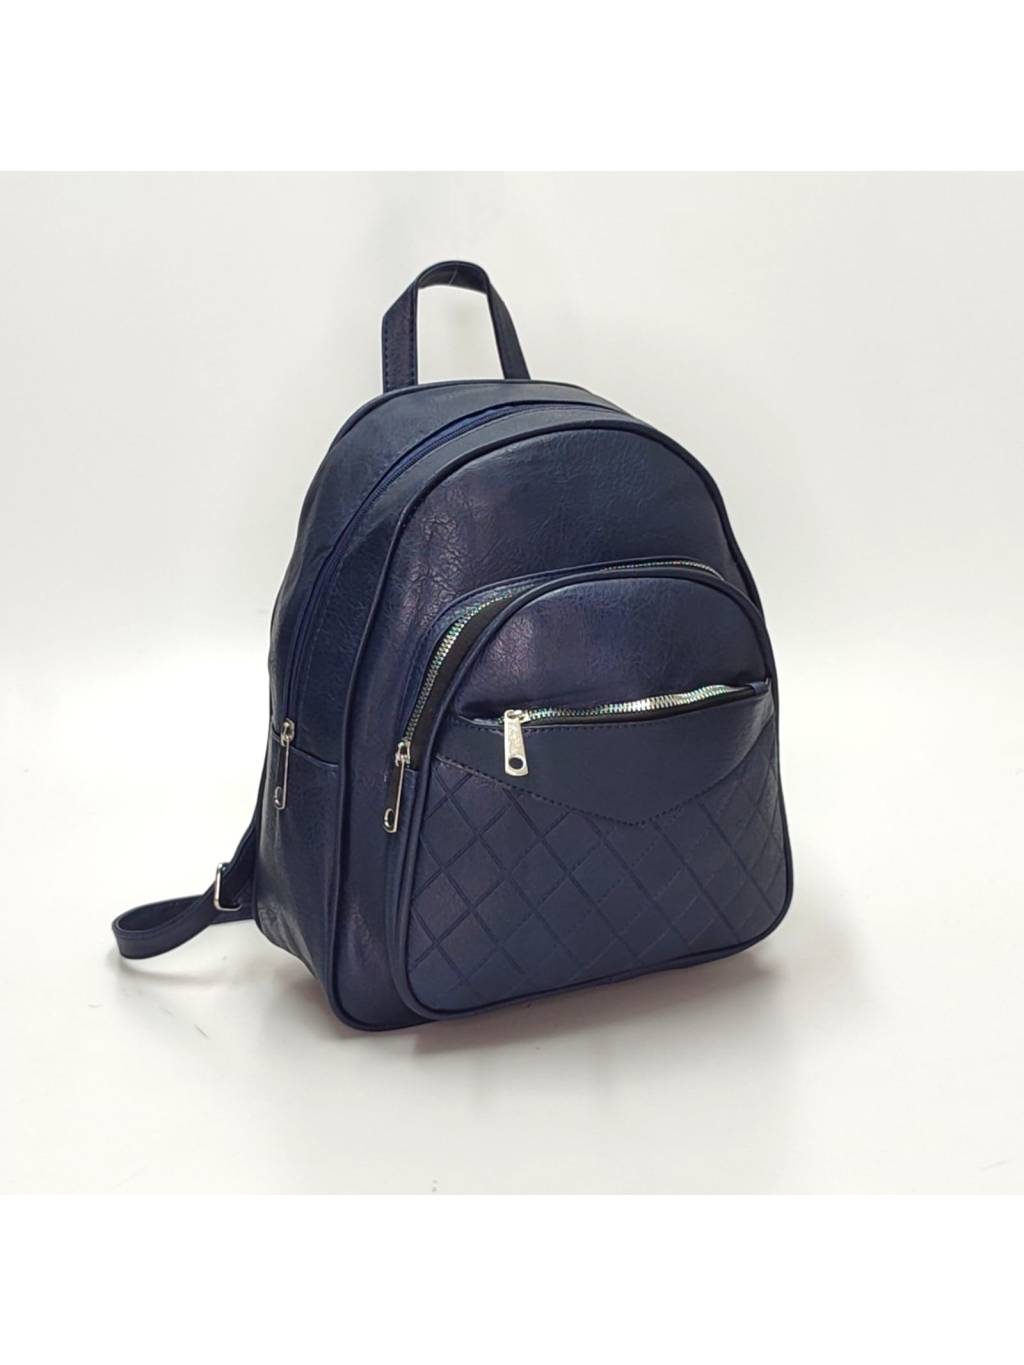 Dámsky ruksak DL0155 tmavomodrá www.kabelky vypredaj.eu (9)